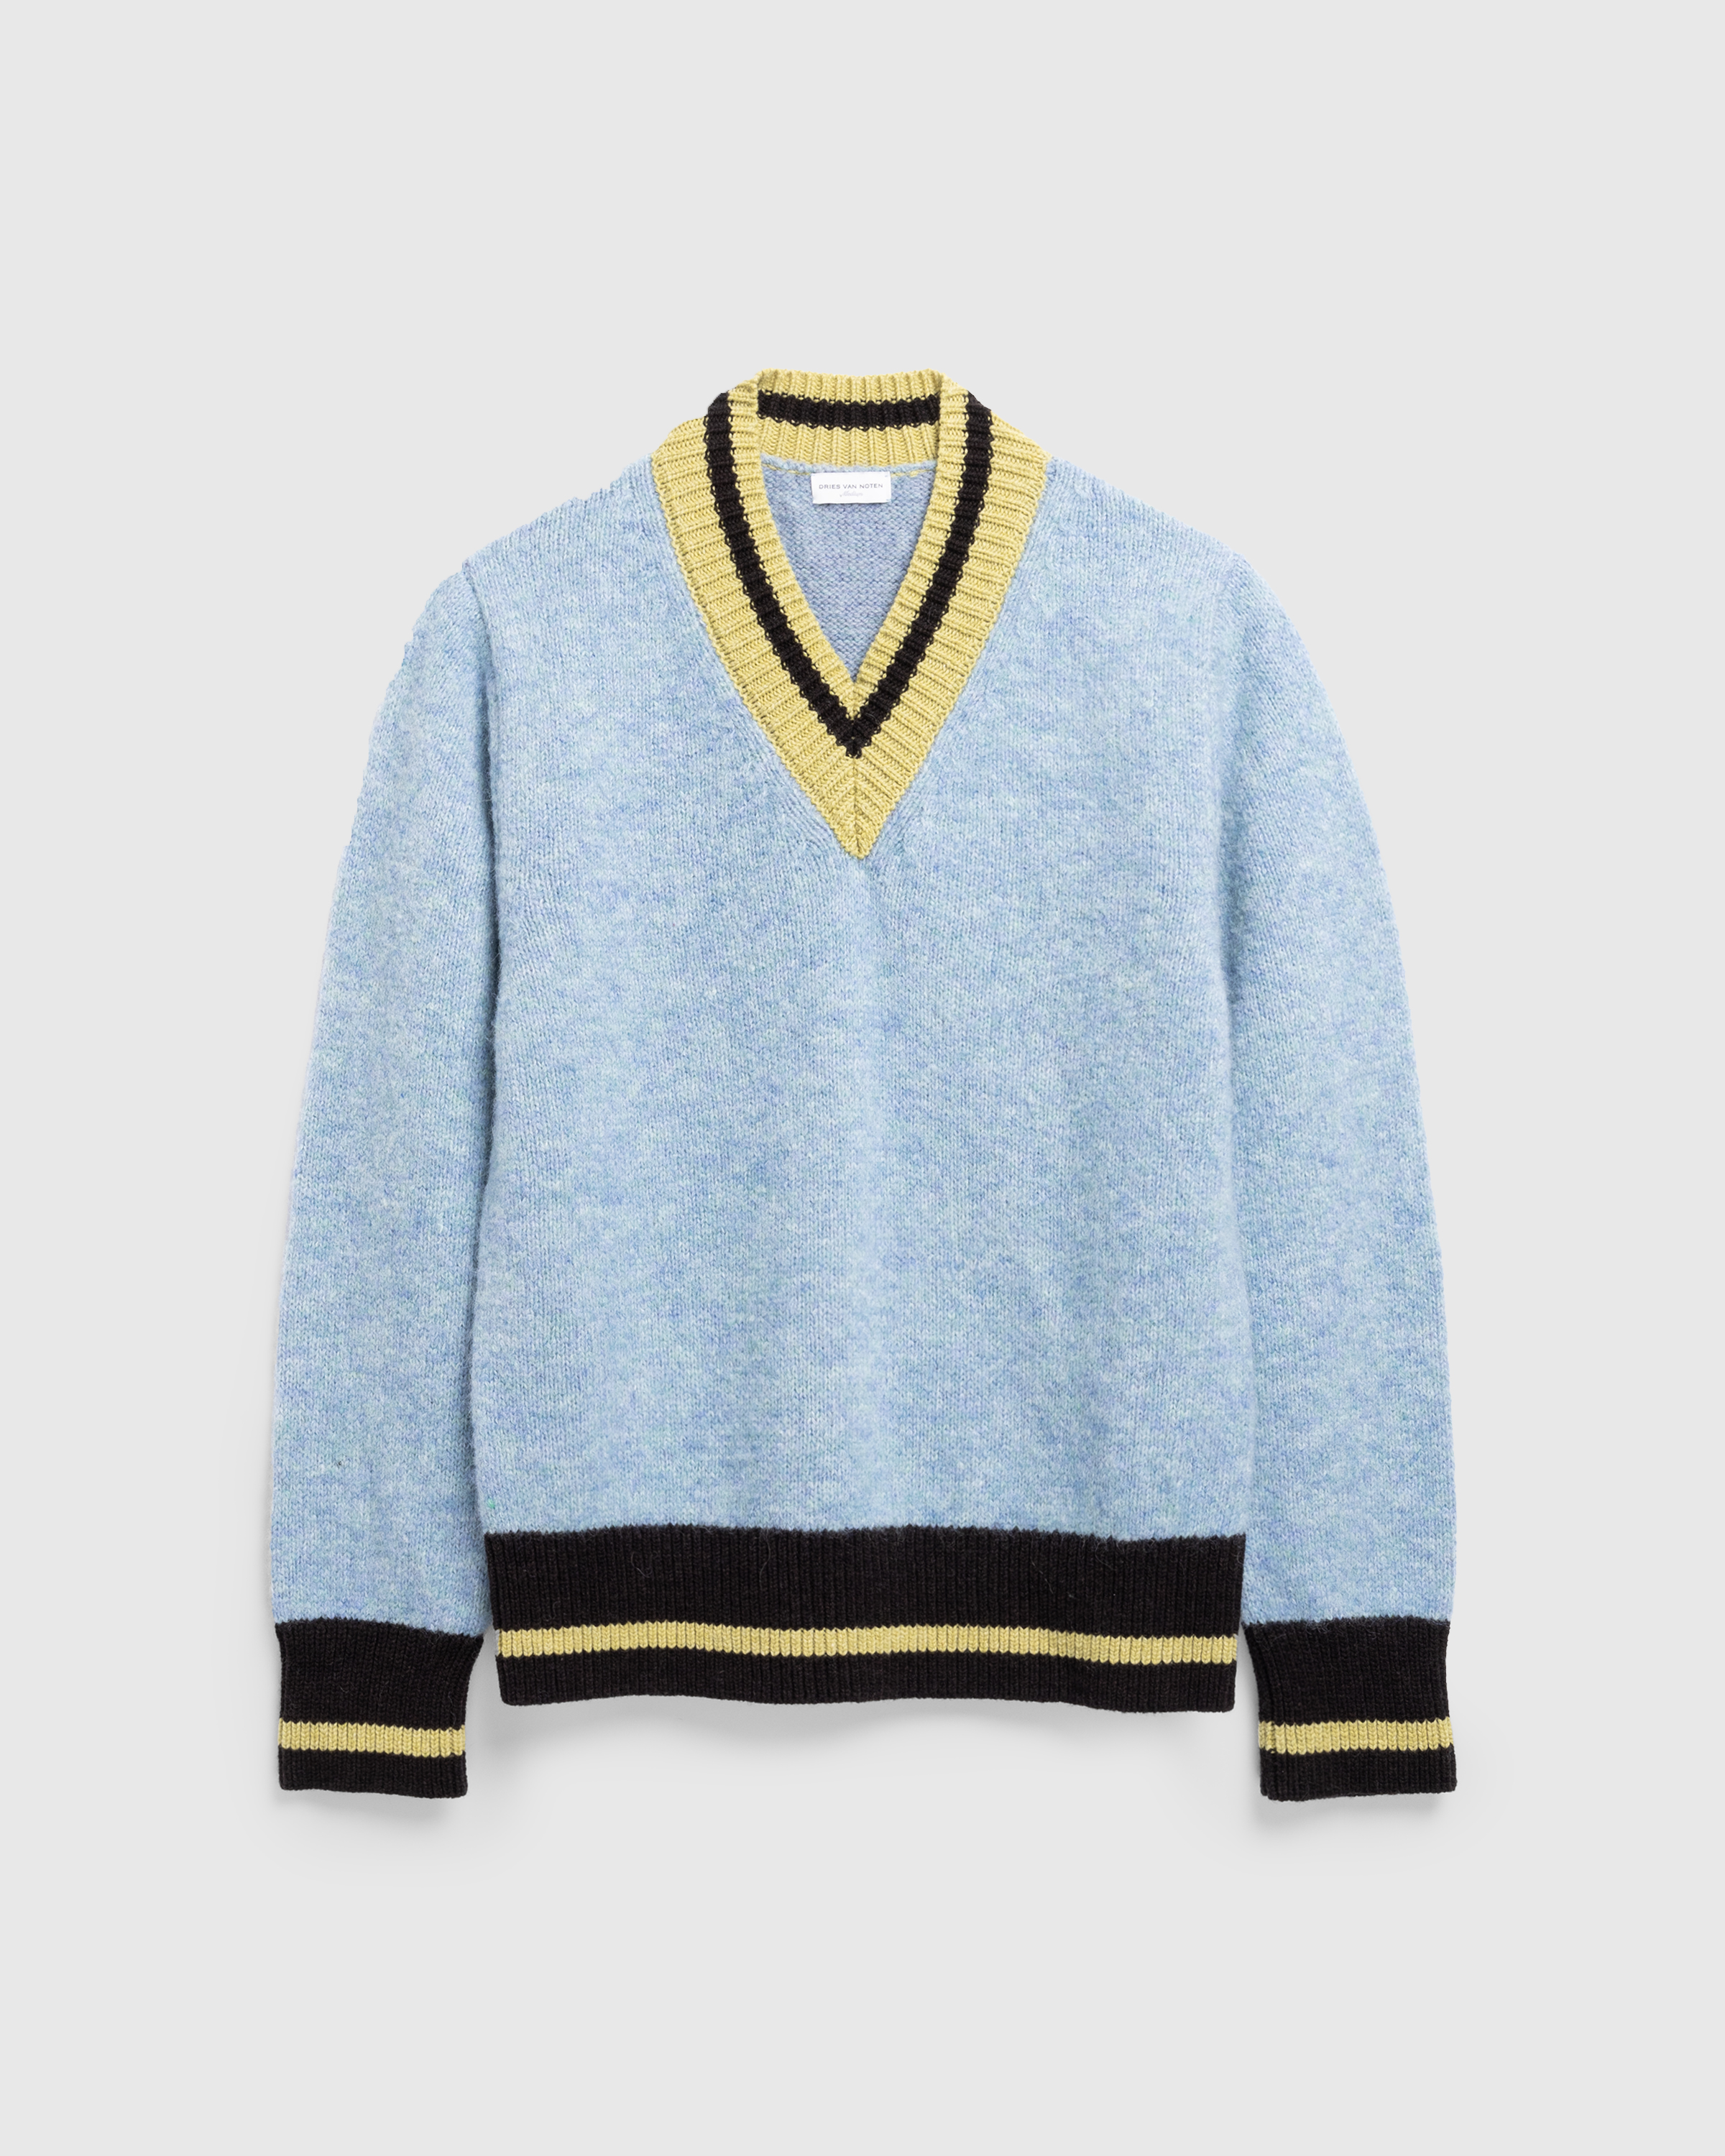 Dries van Noten – Moon Sweater Light Blue - Crewnecks - Blue - Image 1